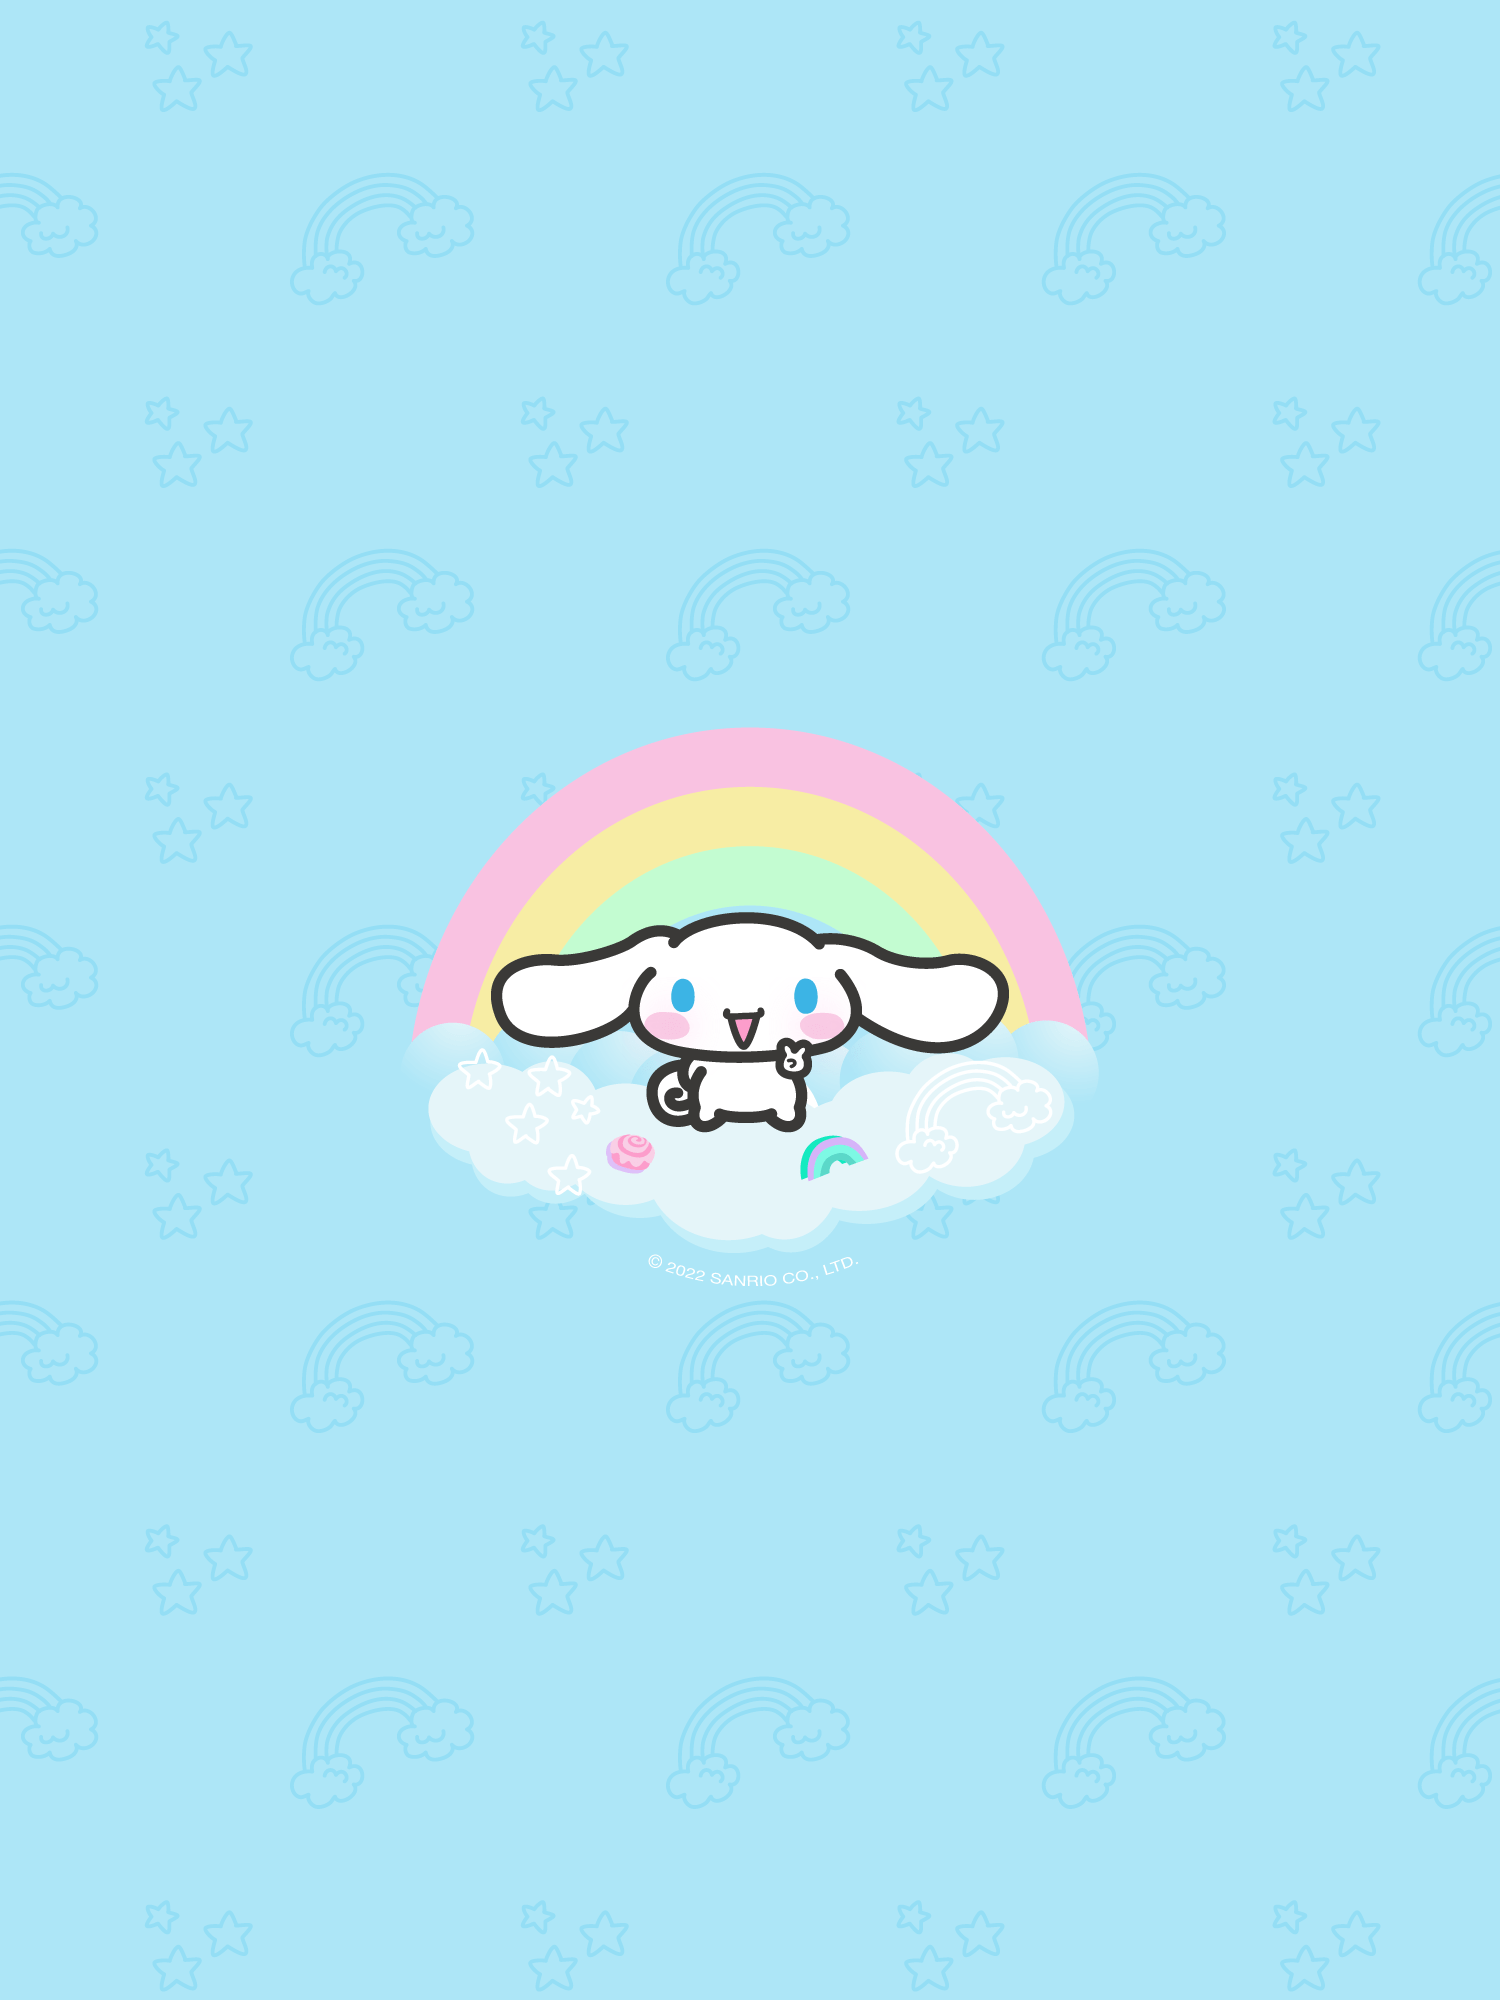 A cute wallpaper of Cinnamoroll on a cloud with a rainbow. - Cinnamoroll, Sanrio